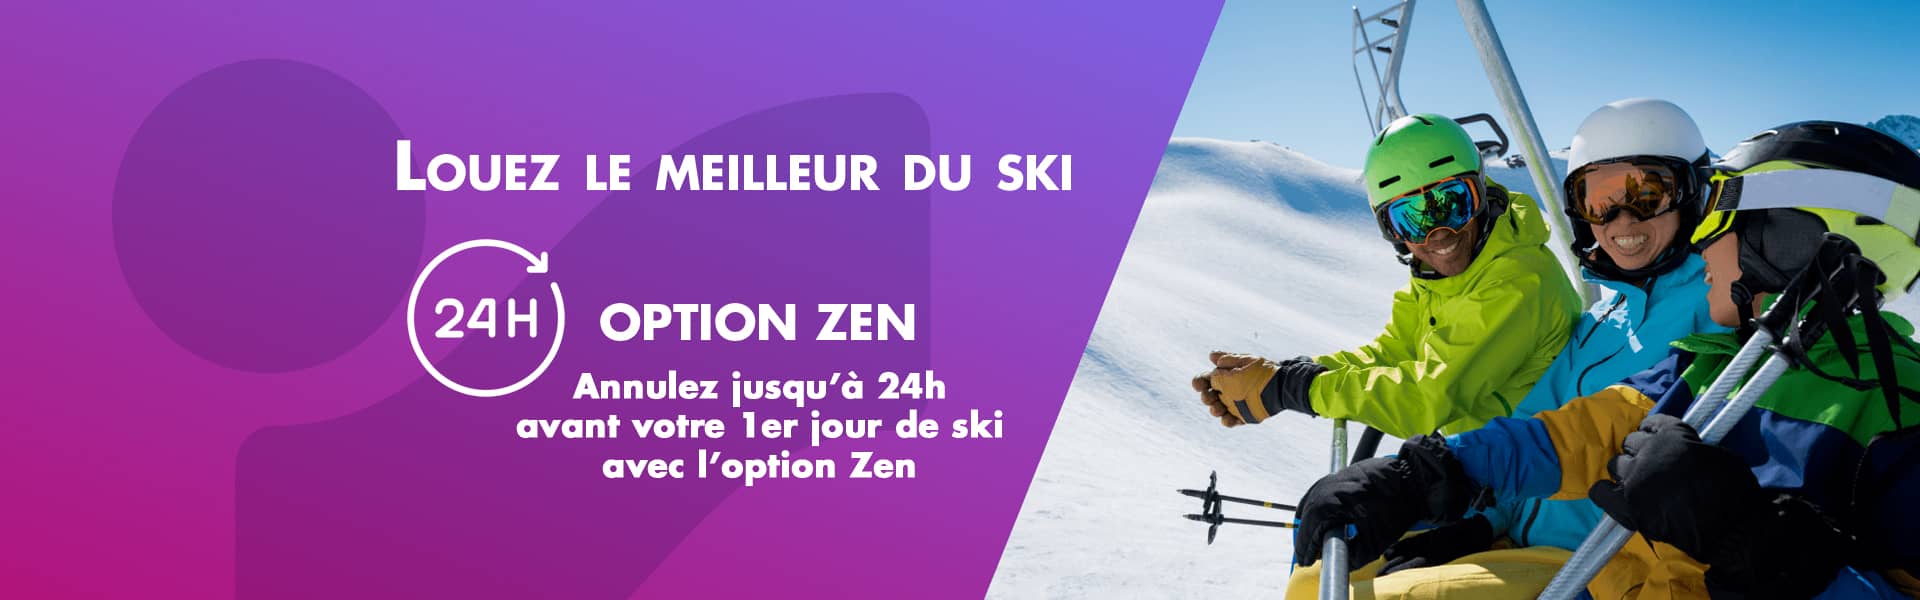 Location ski Intersport La Foux d'Allos